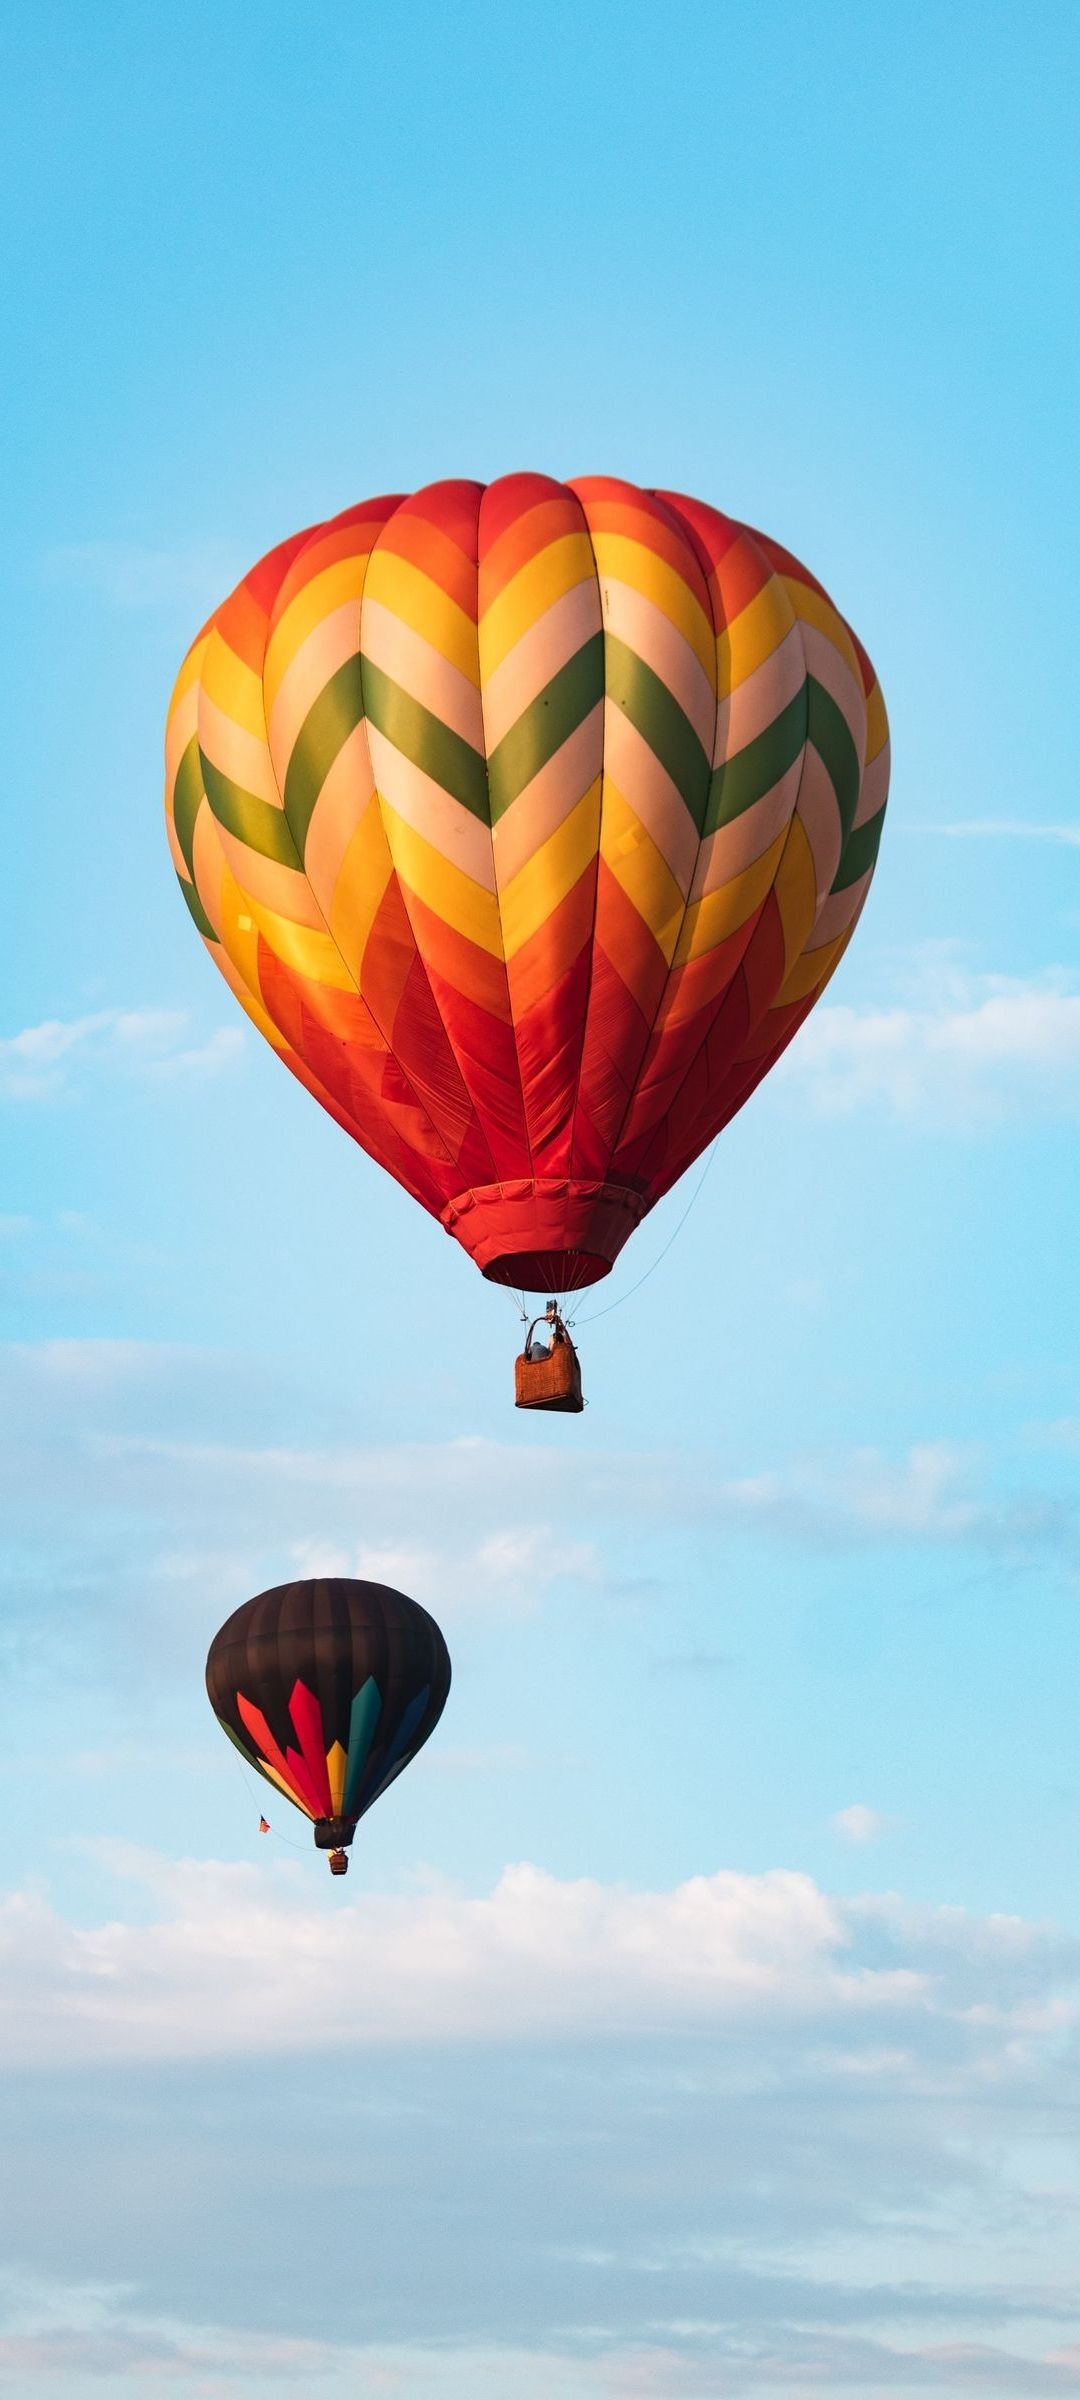 Hot Air Balloon: Festival at the Fairgrounds, The Dreamstar Balloon Team, 2017. 1080x2400 HD Wallpaper.